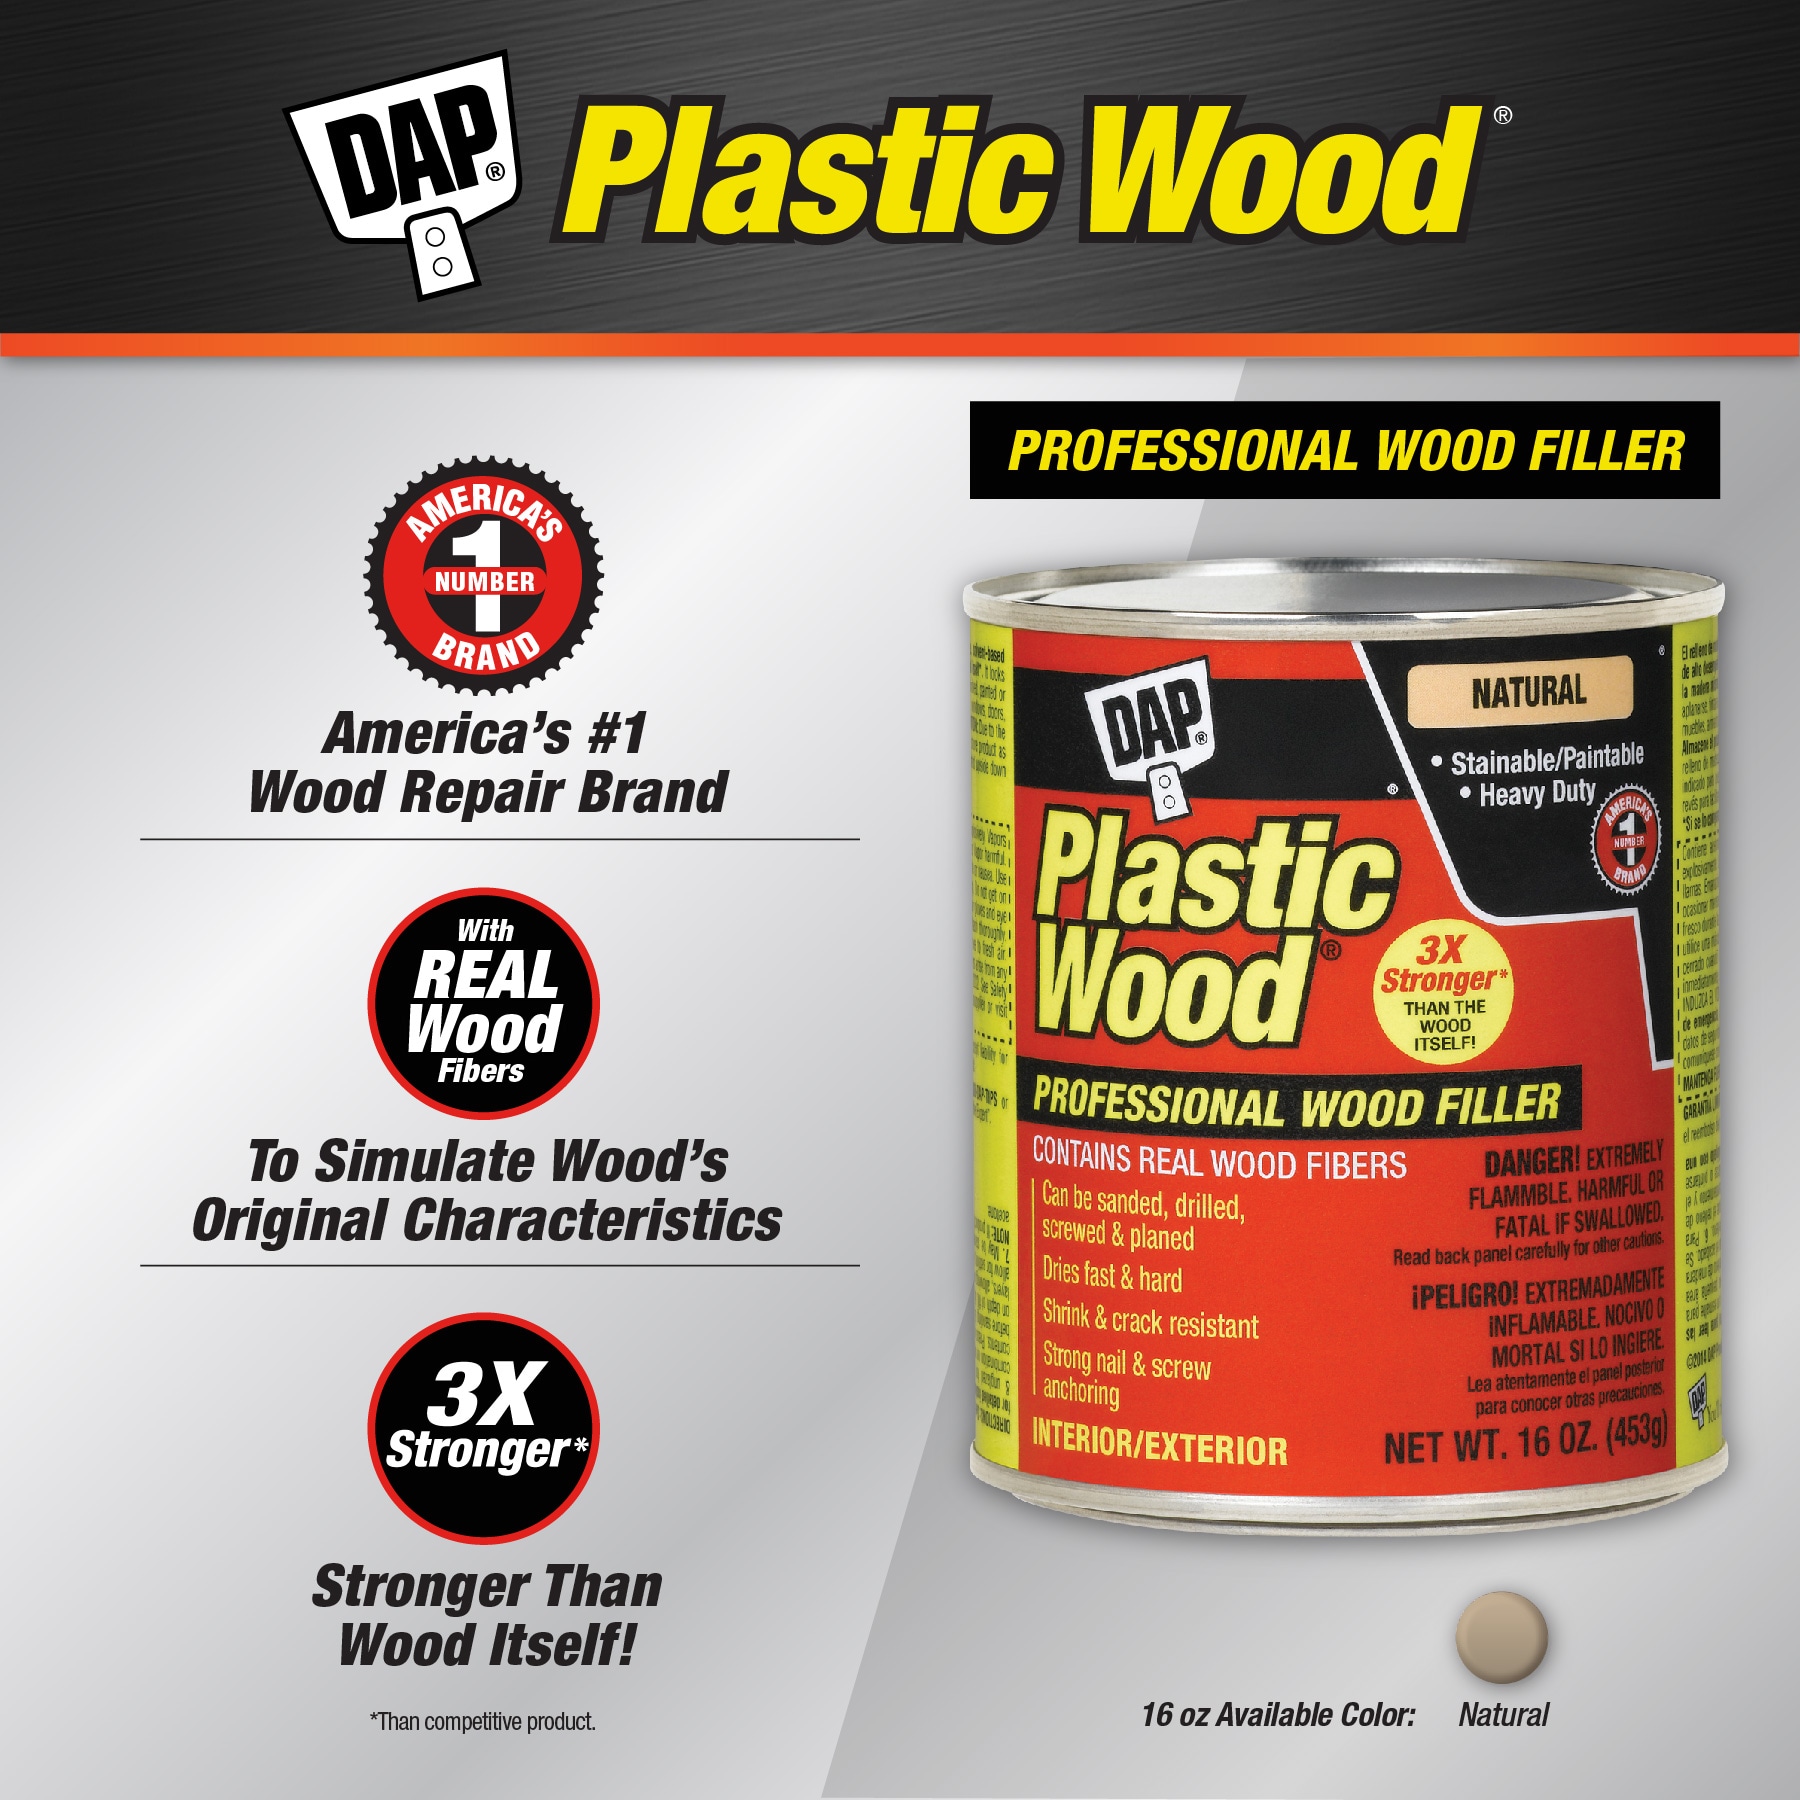 Plastic Wood Professional Wood Filler